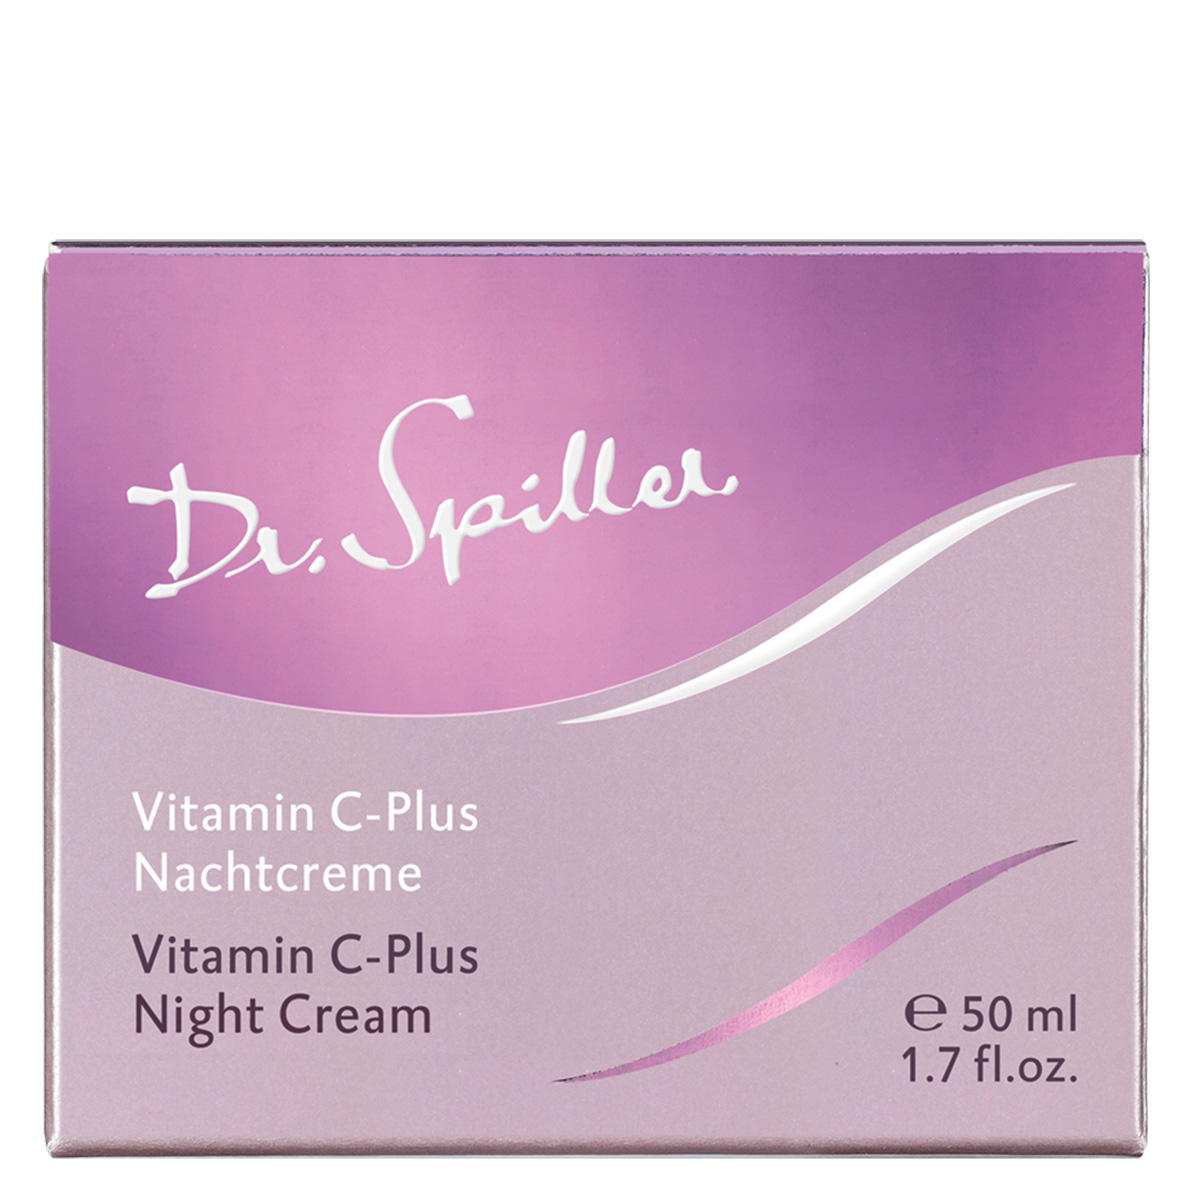 Dr. Spiller Biomimetic SkinCare Vitamin C-Plus Nachtcreme 50 ml - 3